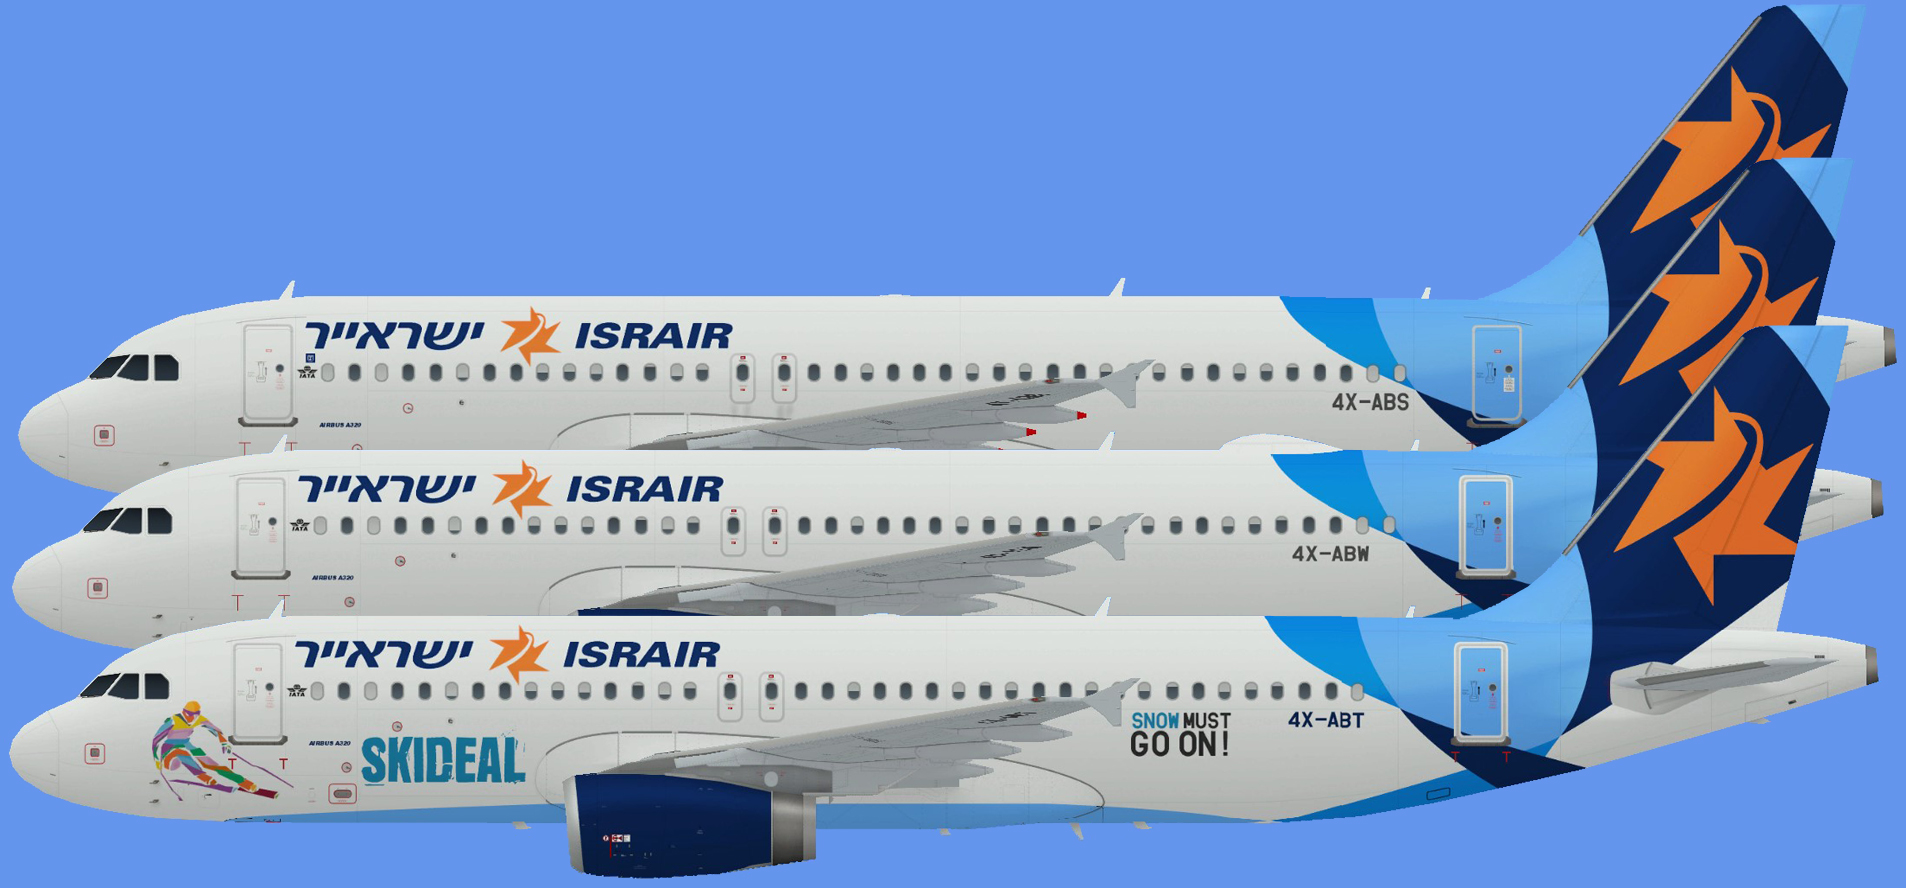 Israir Airbus A320 fleet update